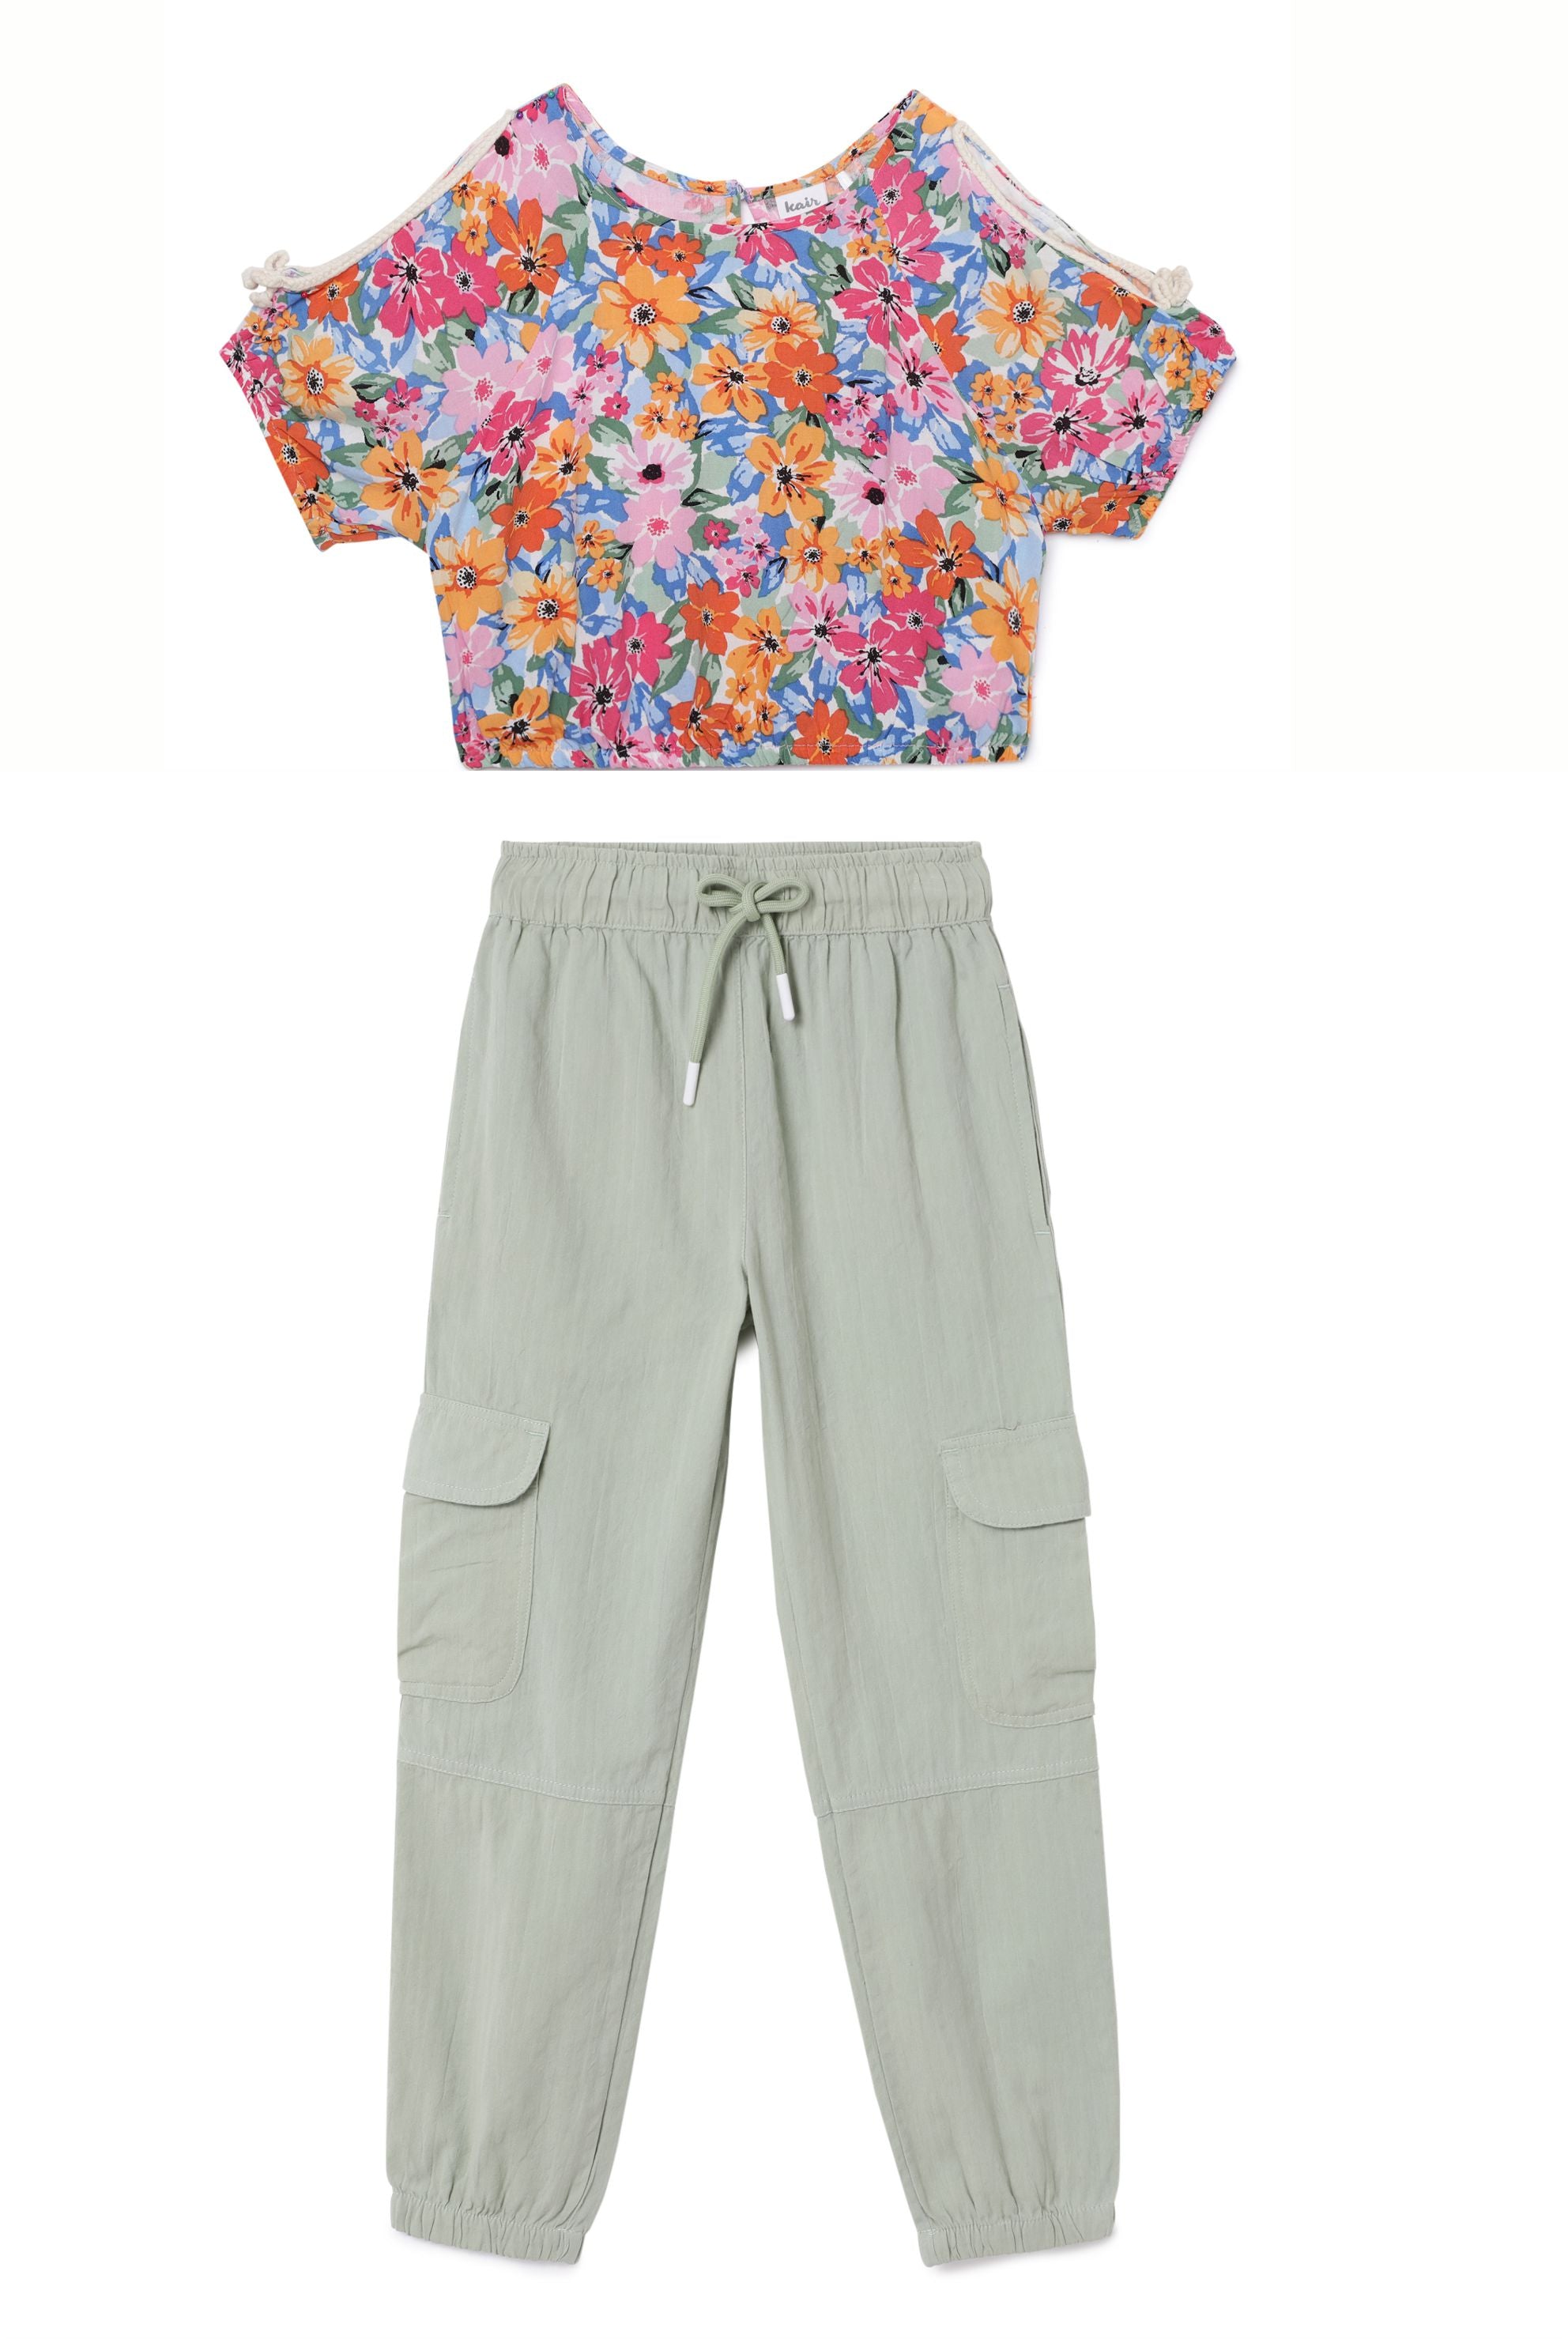 Mareya Trade - Fashion girls cargo pants 2020 kids clothing girls 8 to 12  spring kids loose cotton solid color pocket pants 3-12yrs